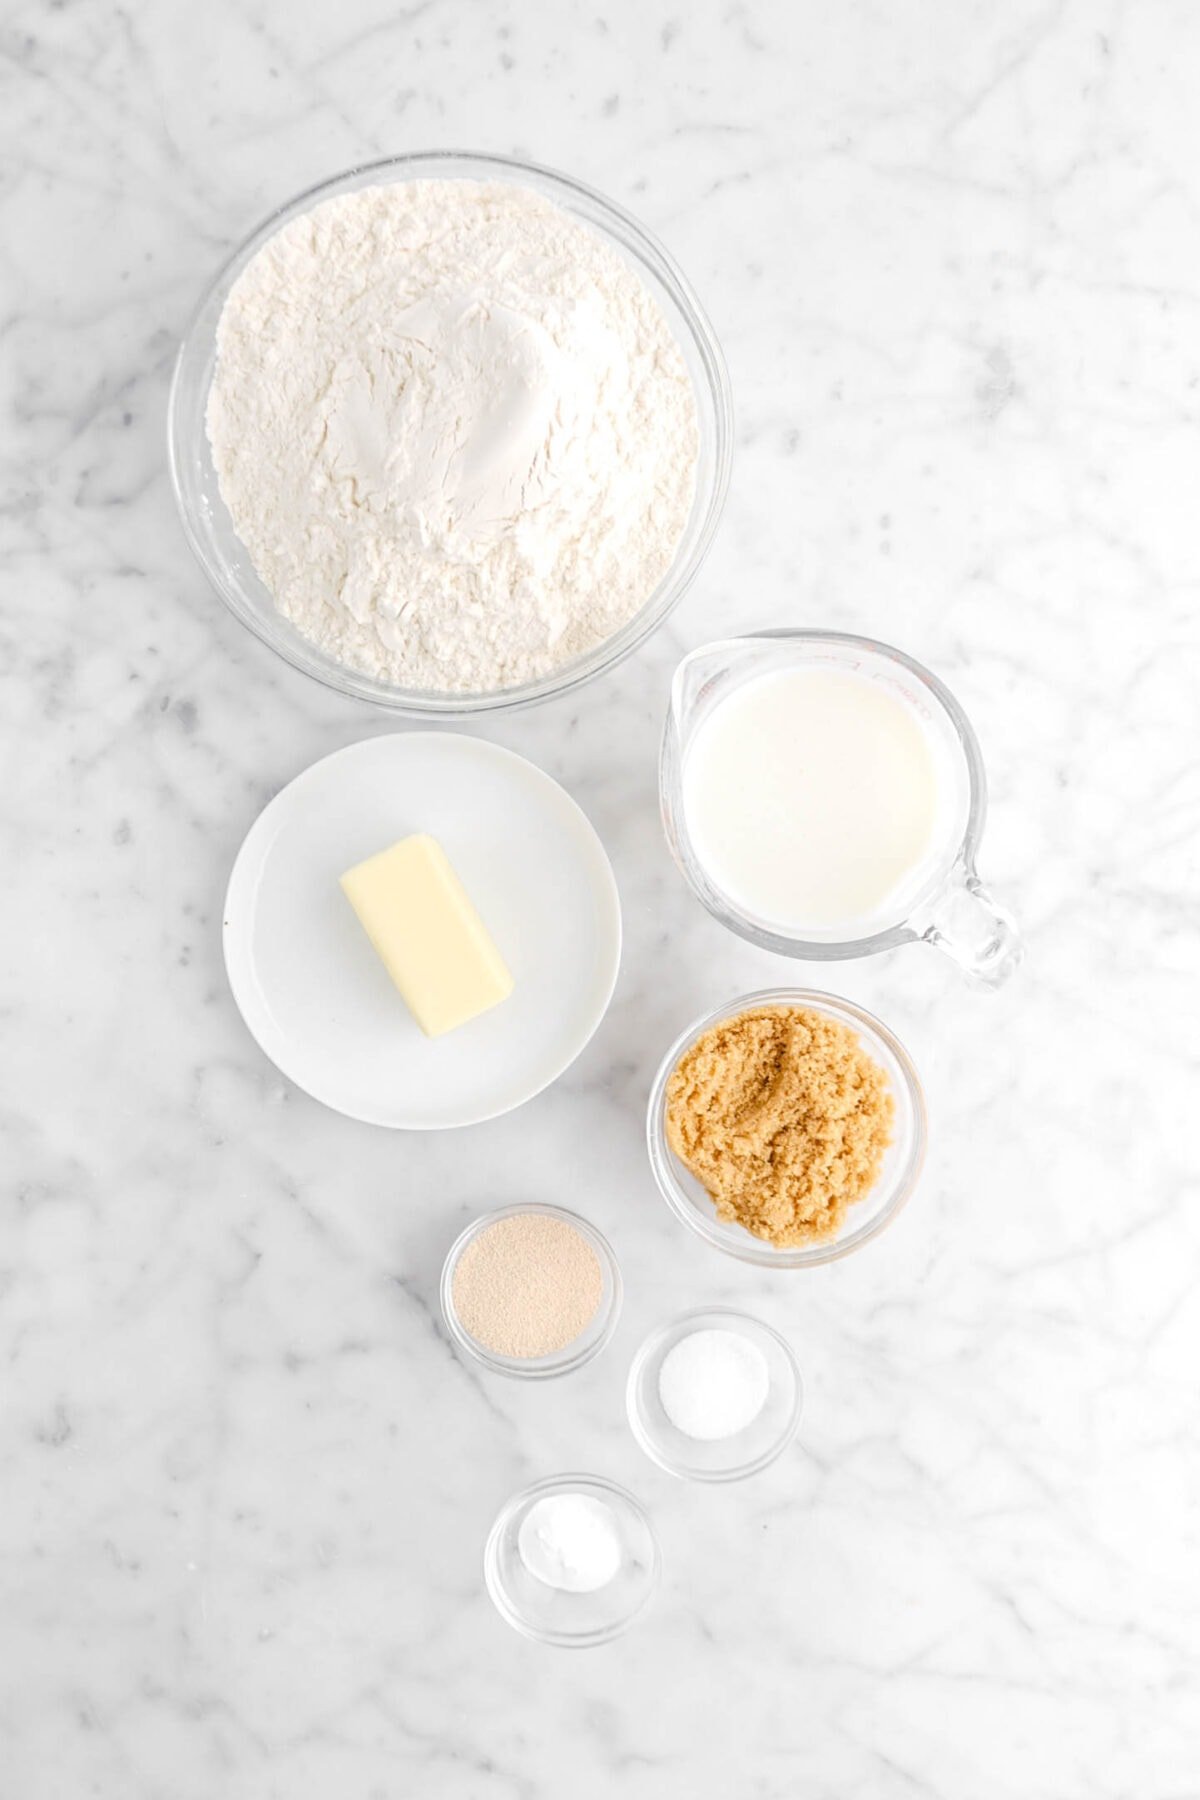 flour, butter, milk, brown sugar, yeast, salt, and baking powder on marble surface